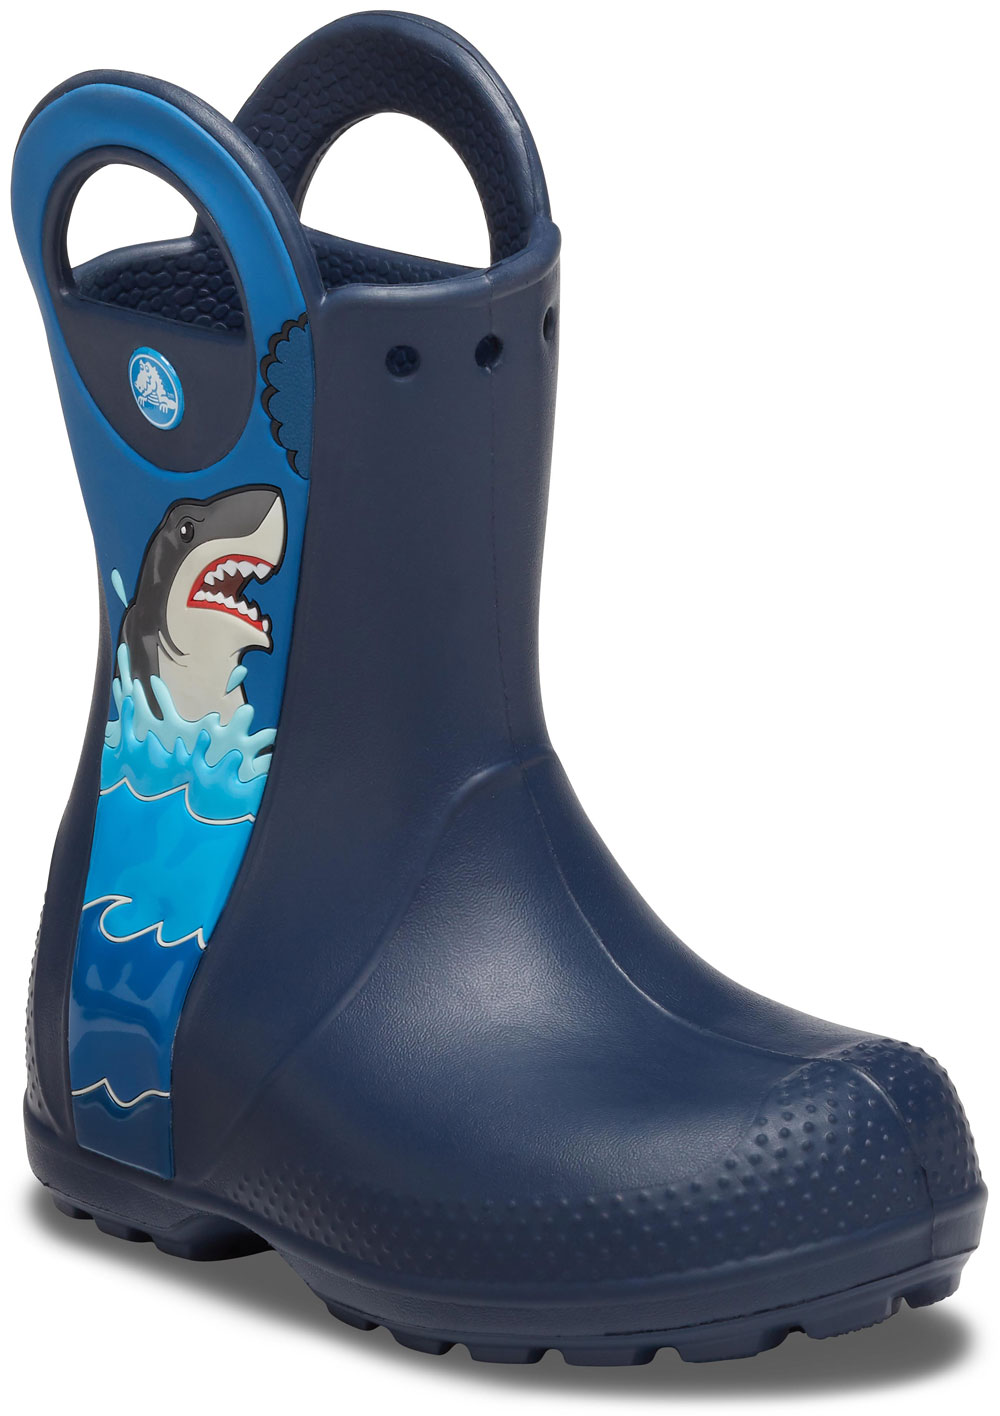 FunLab Shark Patch Rain Boot Kids Navy Croslite